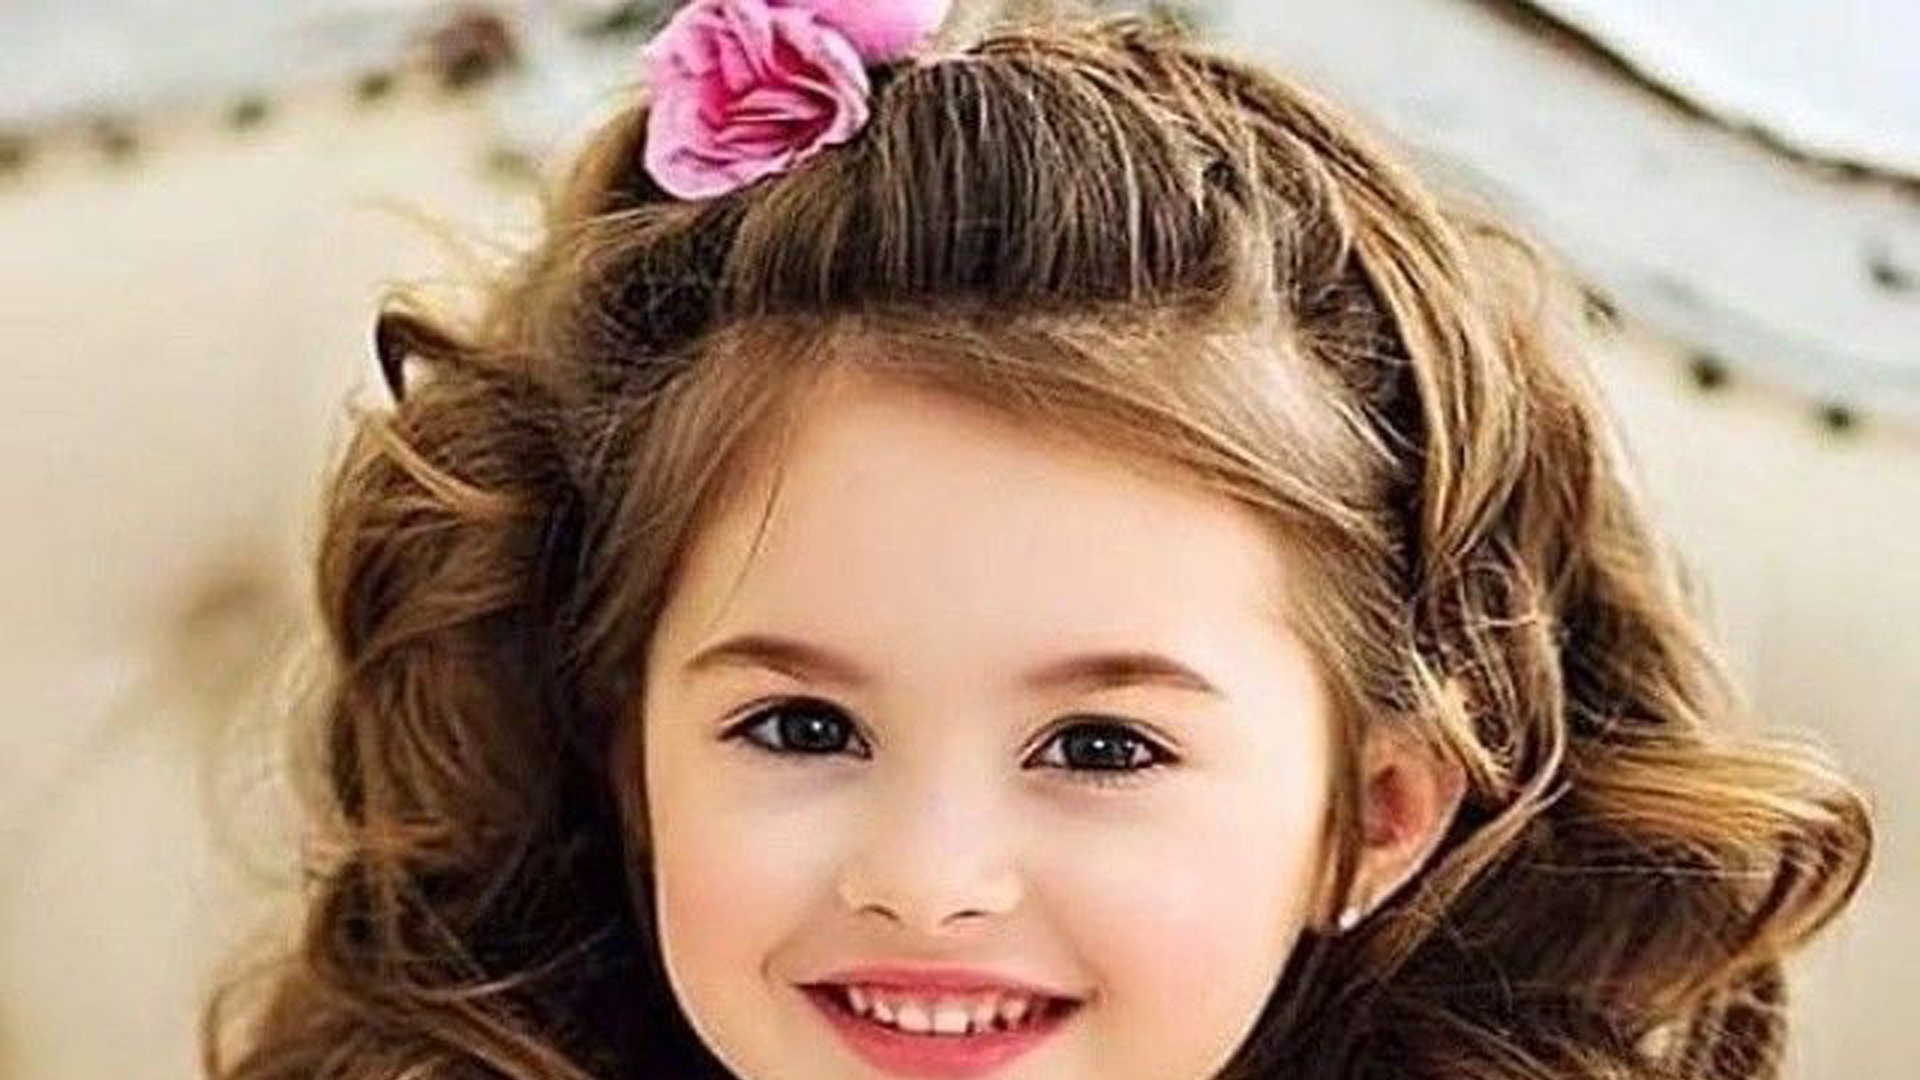 Smiley Little Girl Face In Blur Wallpaper HD